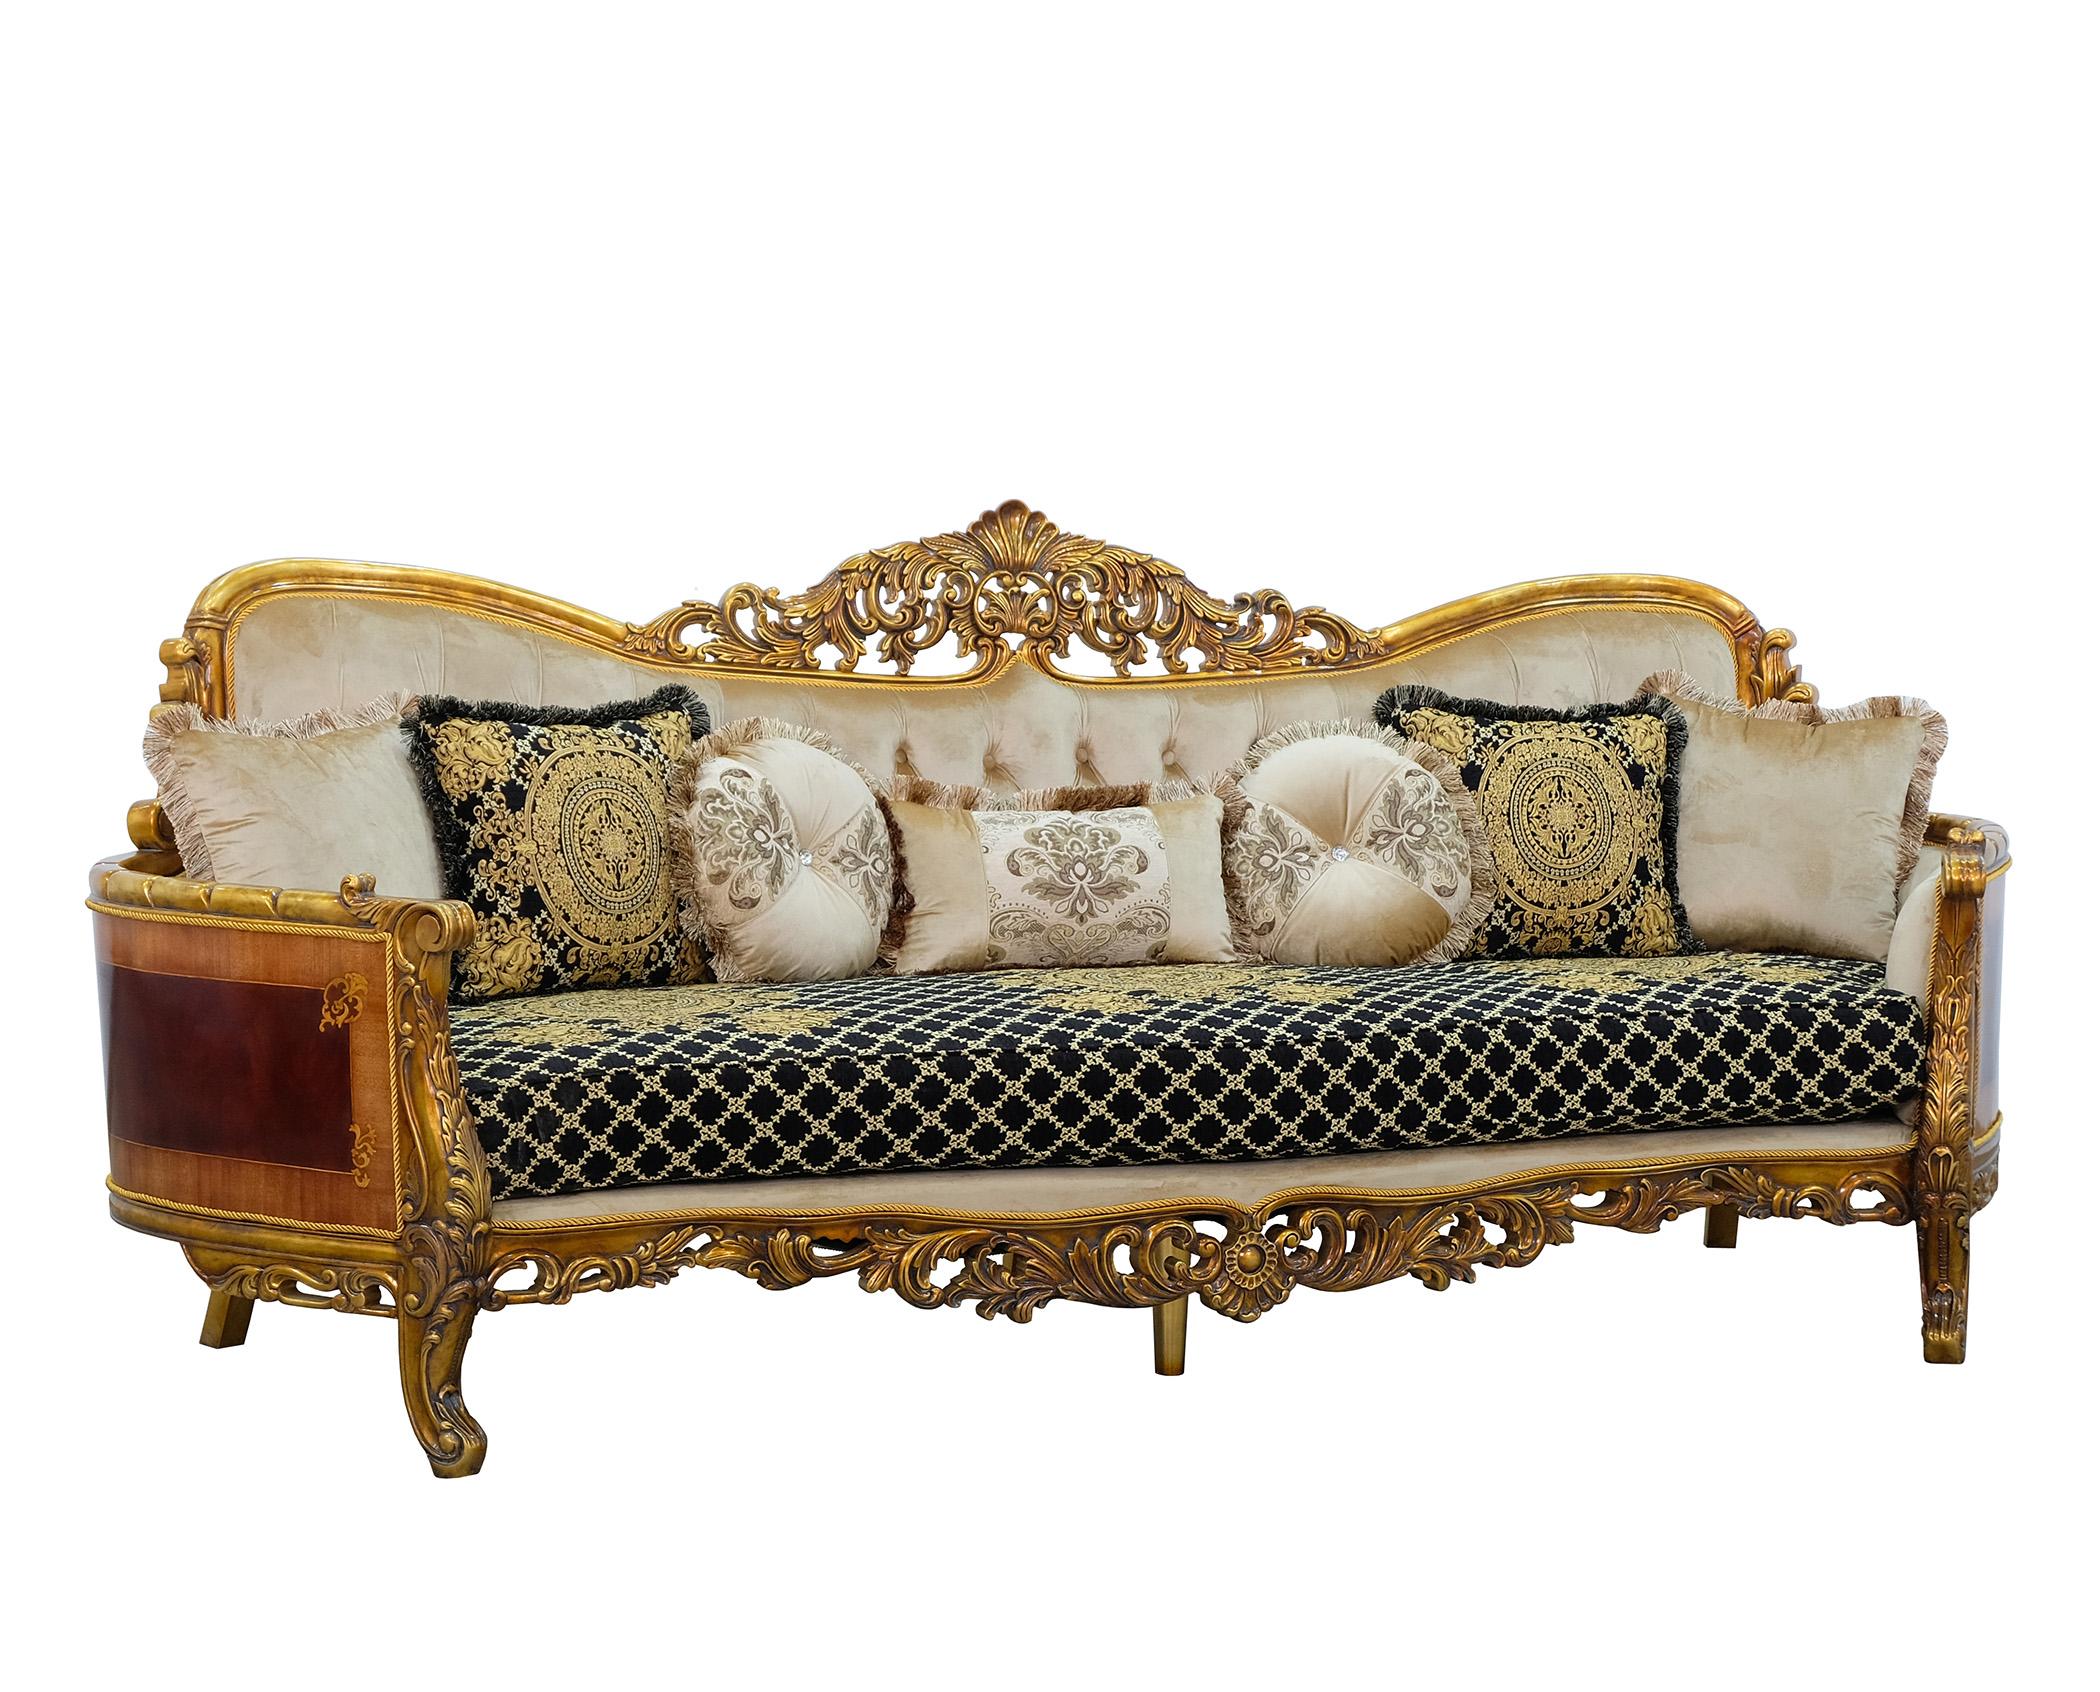 Classic, Traditional Sofa MAGGIOLINI 31059-S in Antique, Gold, Black, Beige Fabric